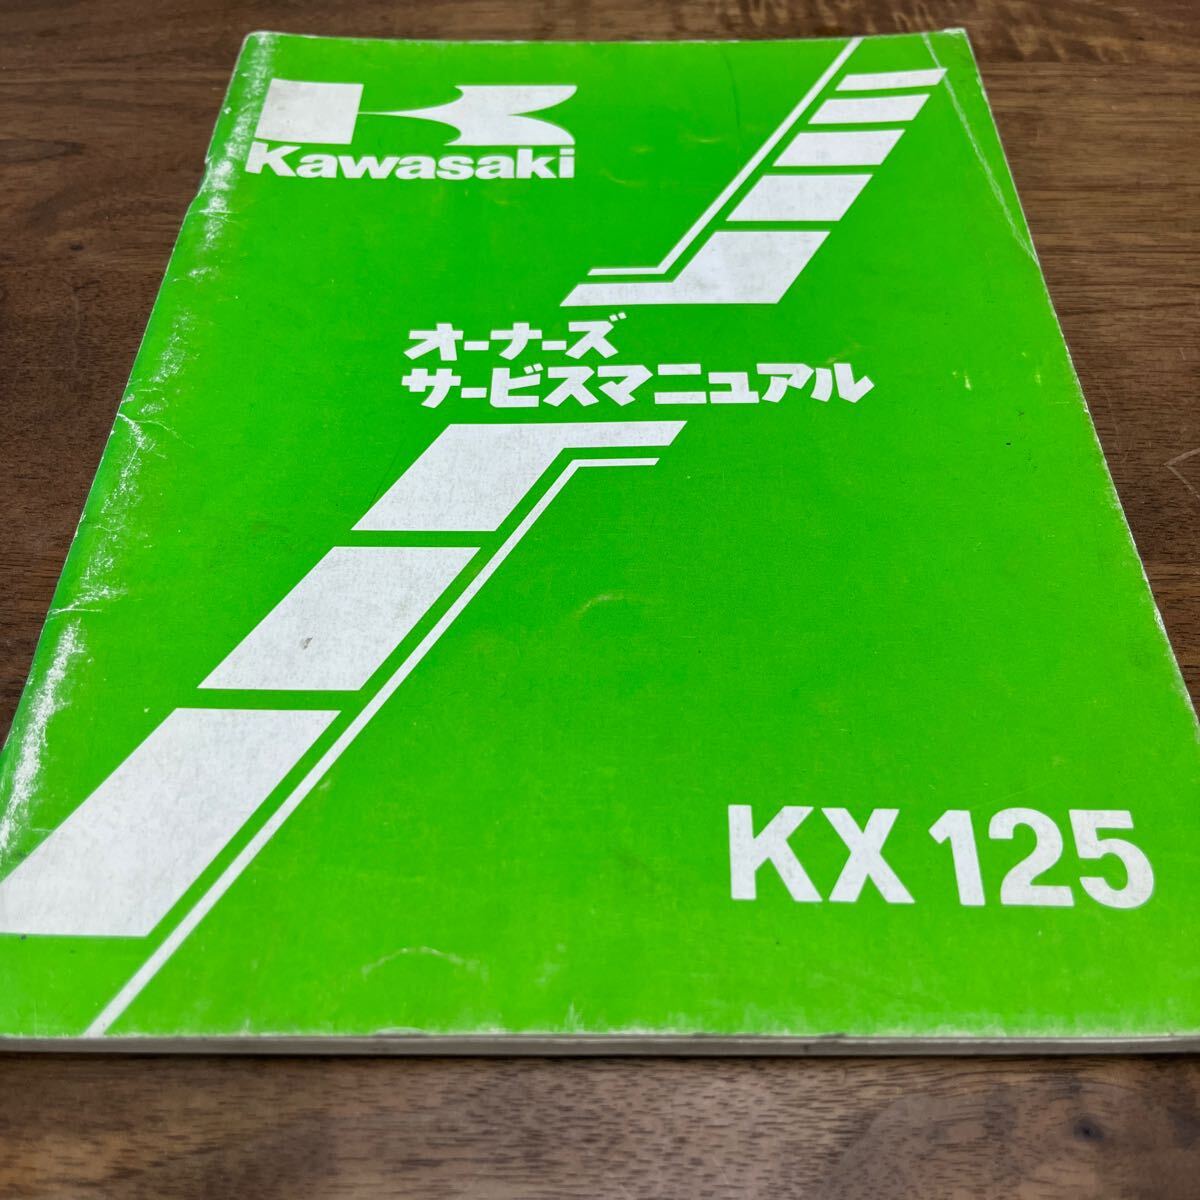 MB-3196★クリックポスト(全国一律送料185円) Kawasaki カワサキ オーナーズサービスマニュアル KX125 1984.8 初版 KX125-D1 N-5/①_画像2